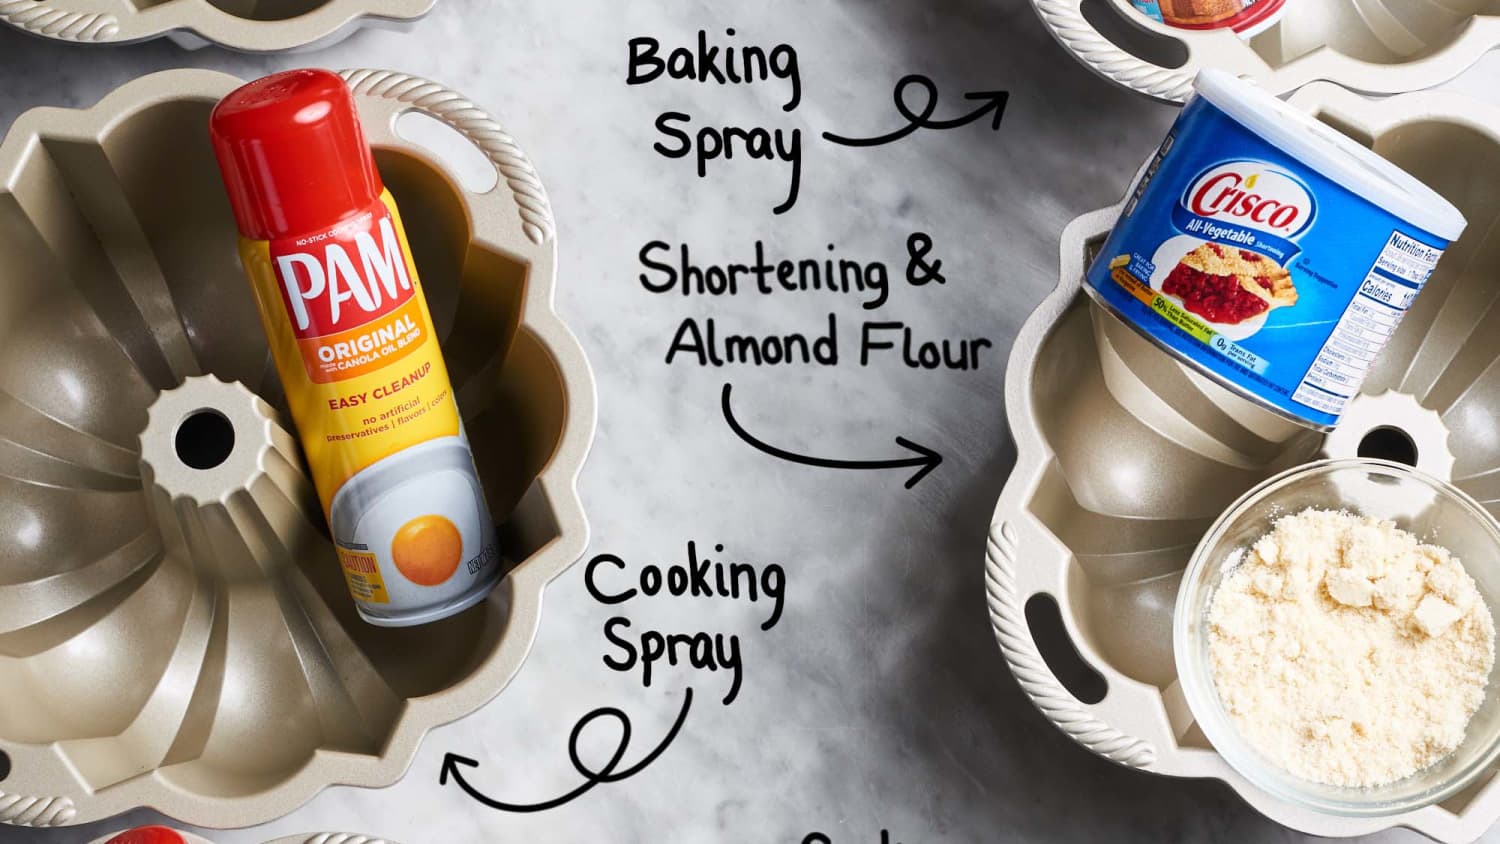 Pam Original Shortening Oil Cooking Spray Case